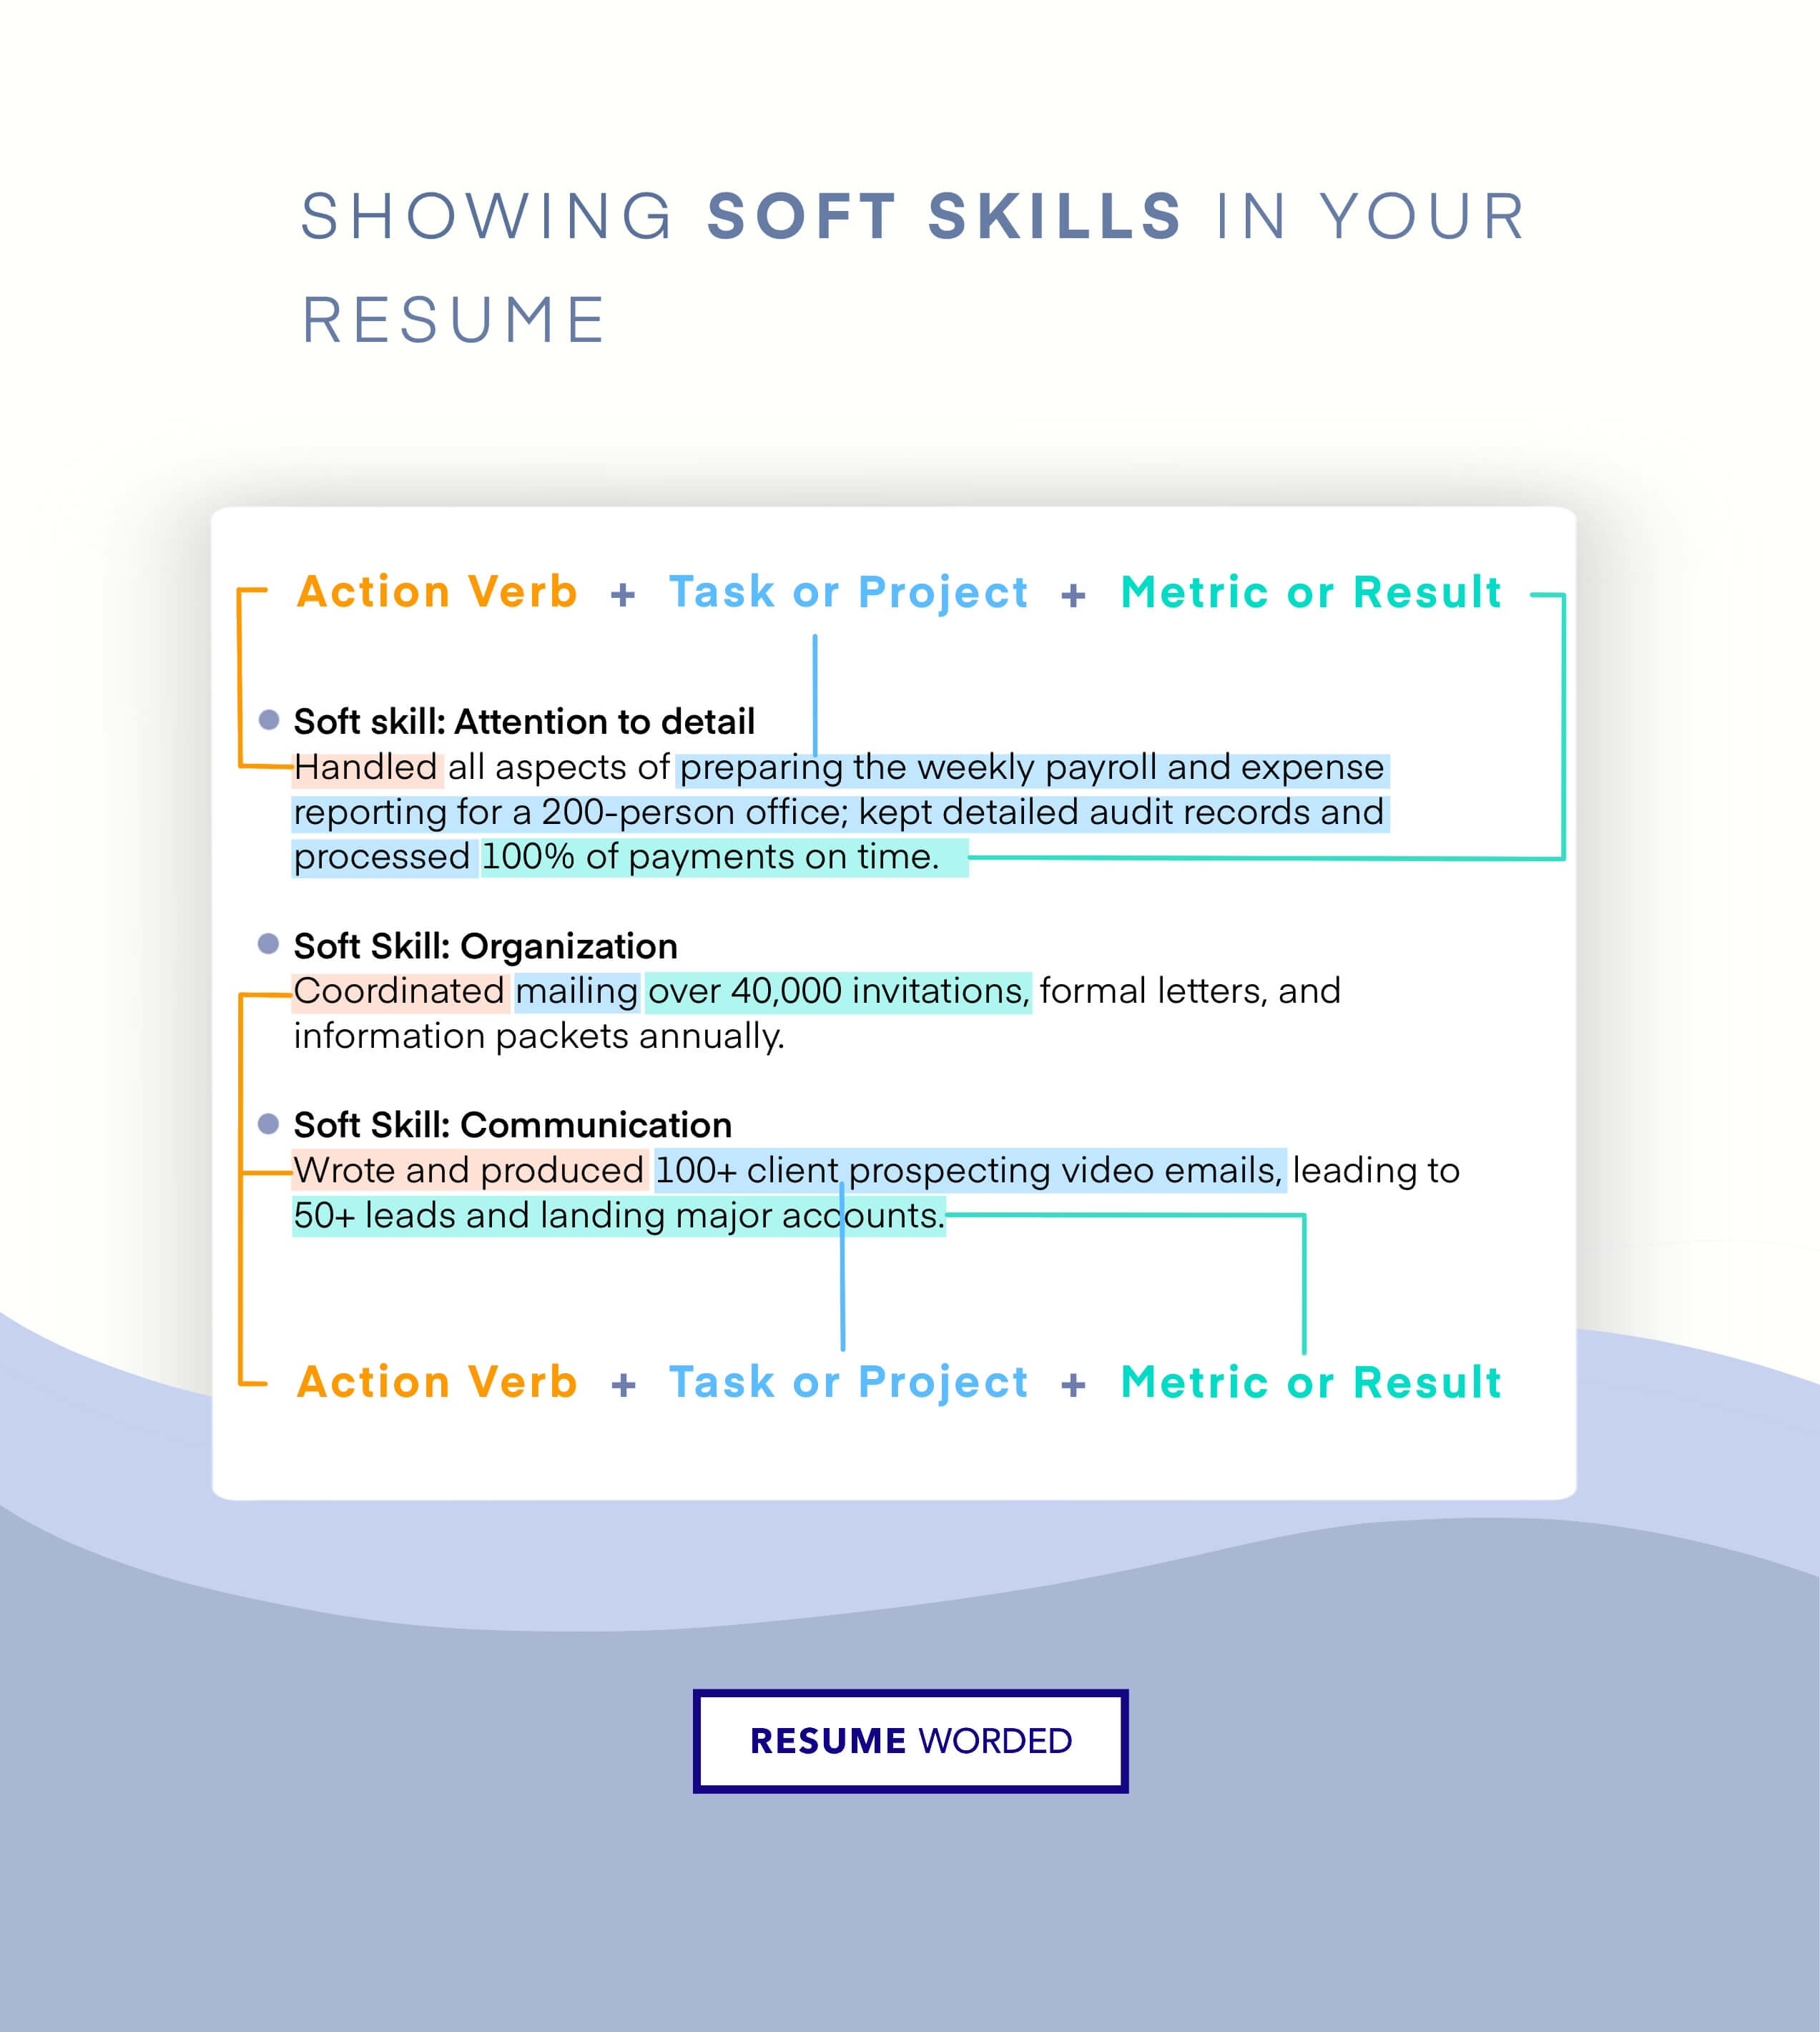 Showcase soft skills through concrete examples - Customer Service Manager CV